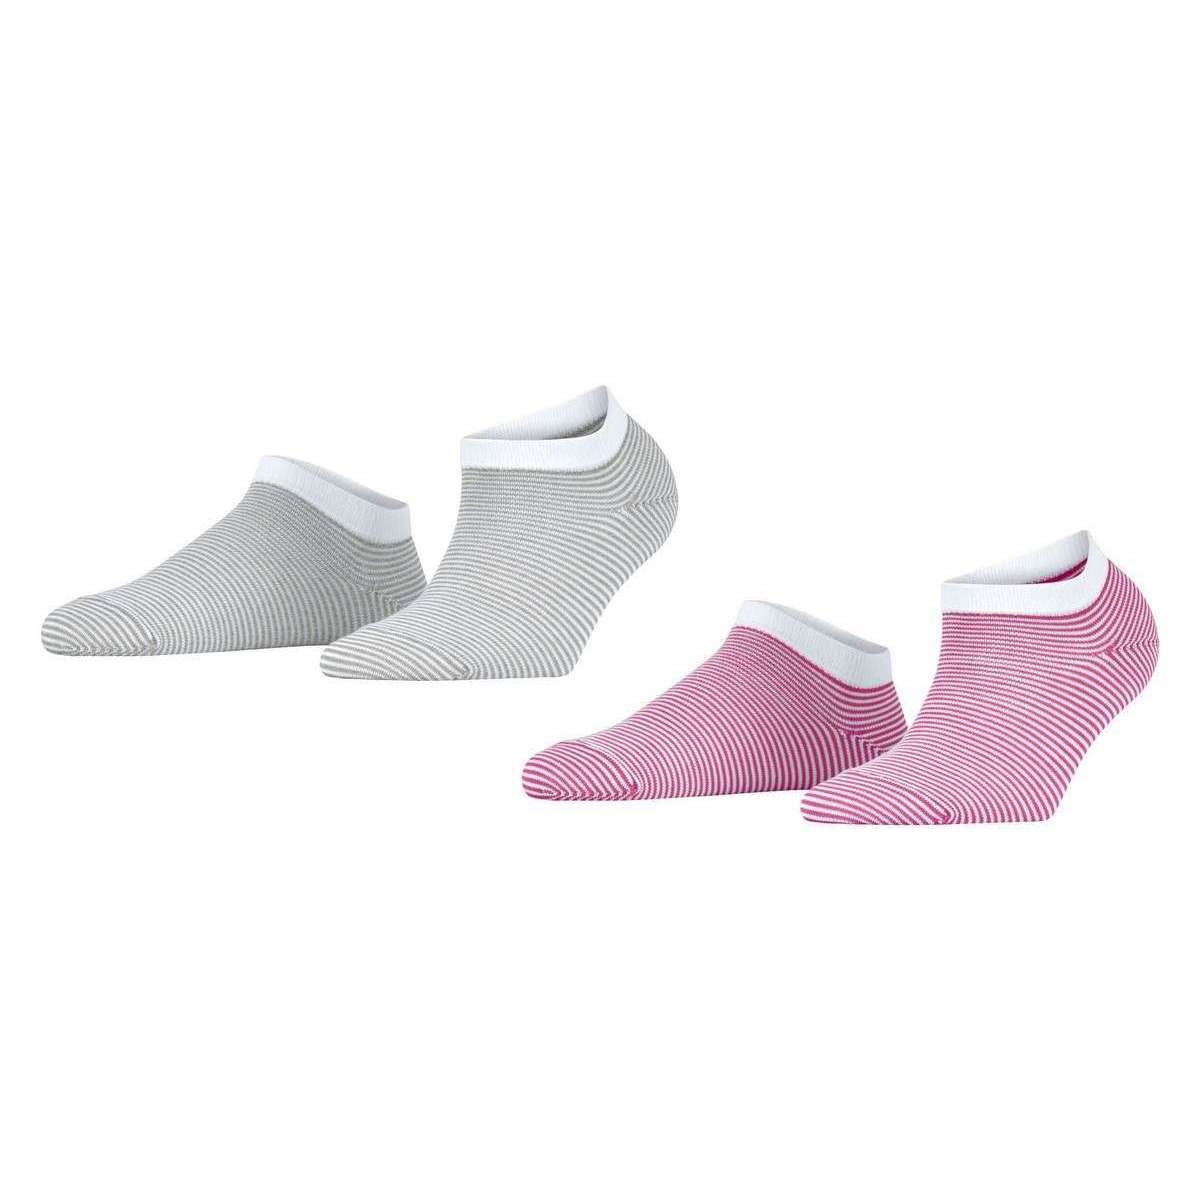 Esprit Allover Stripe 2 Pack Sneaker Socks - Pink/Grey